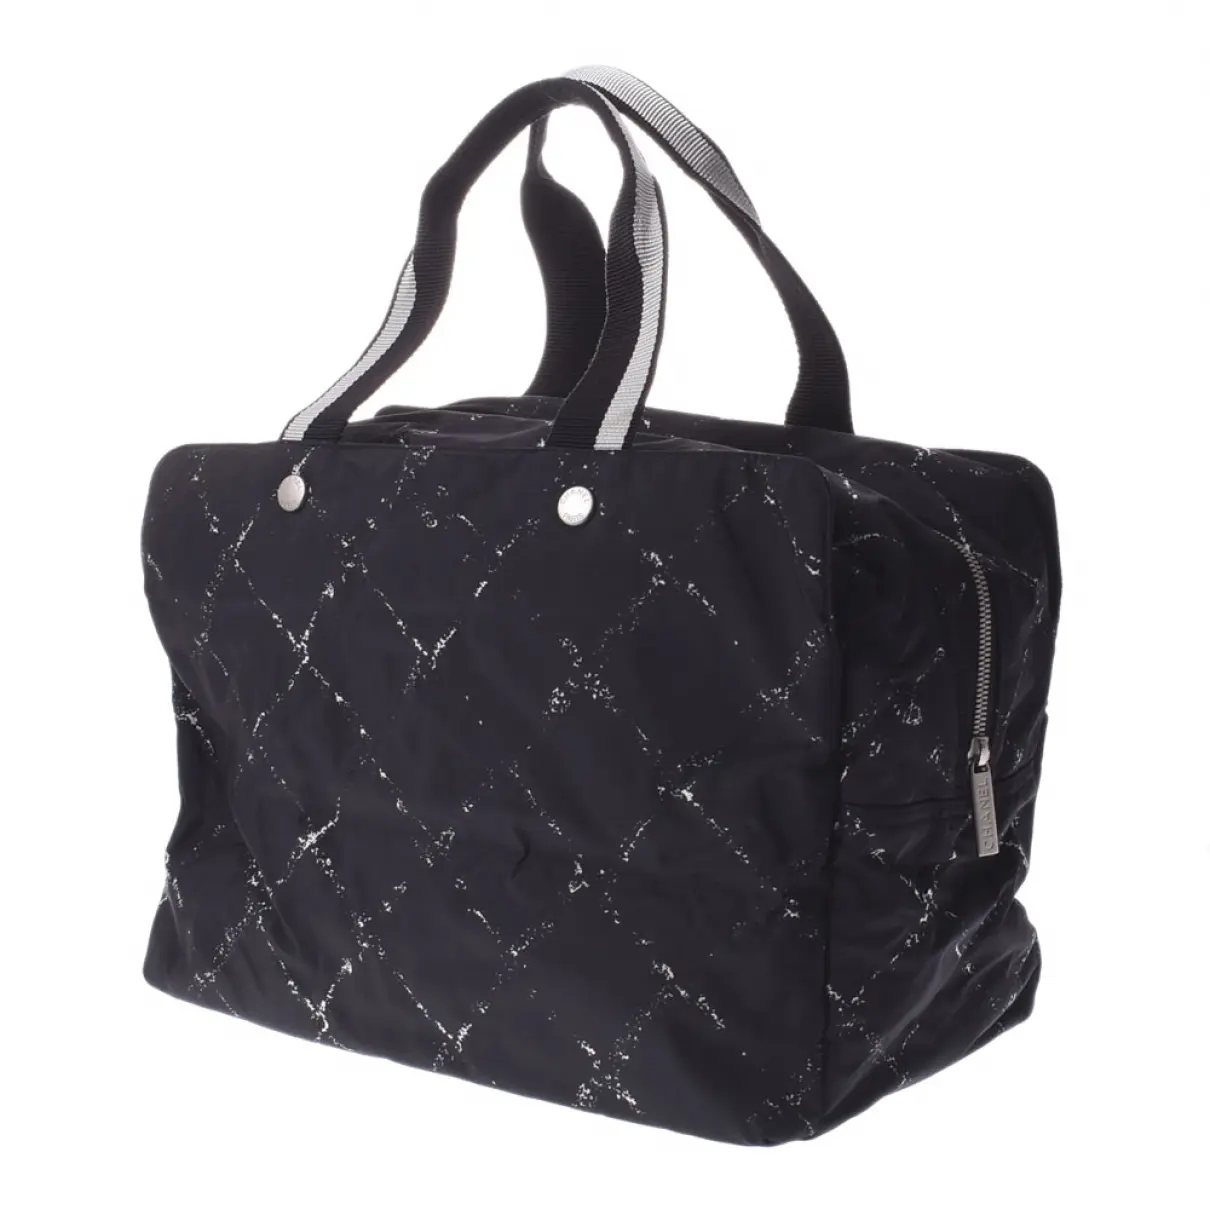 Luxury Chanel Travel bags Women